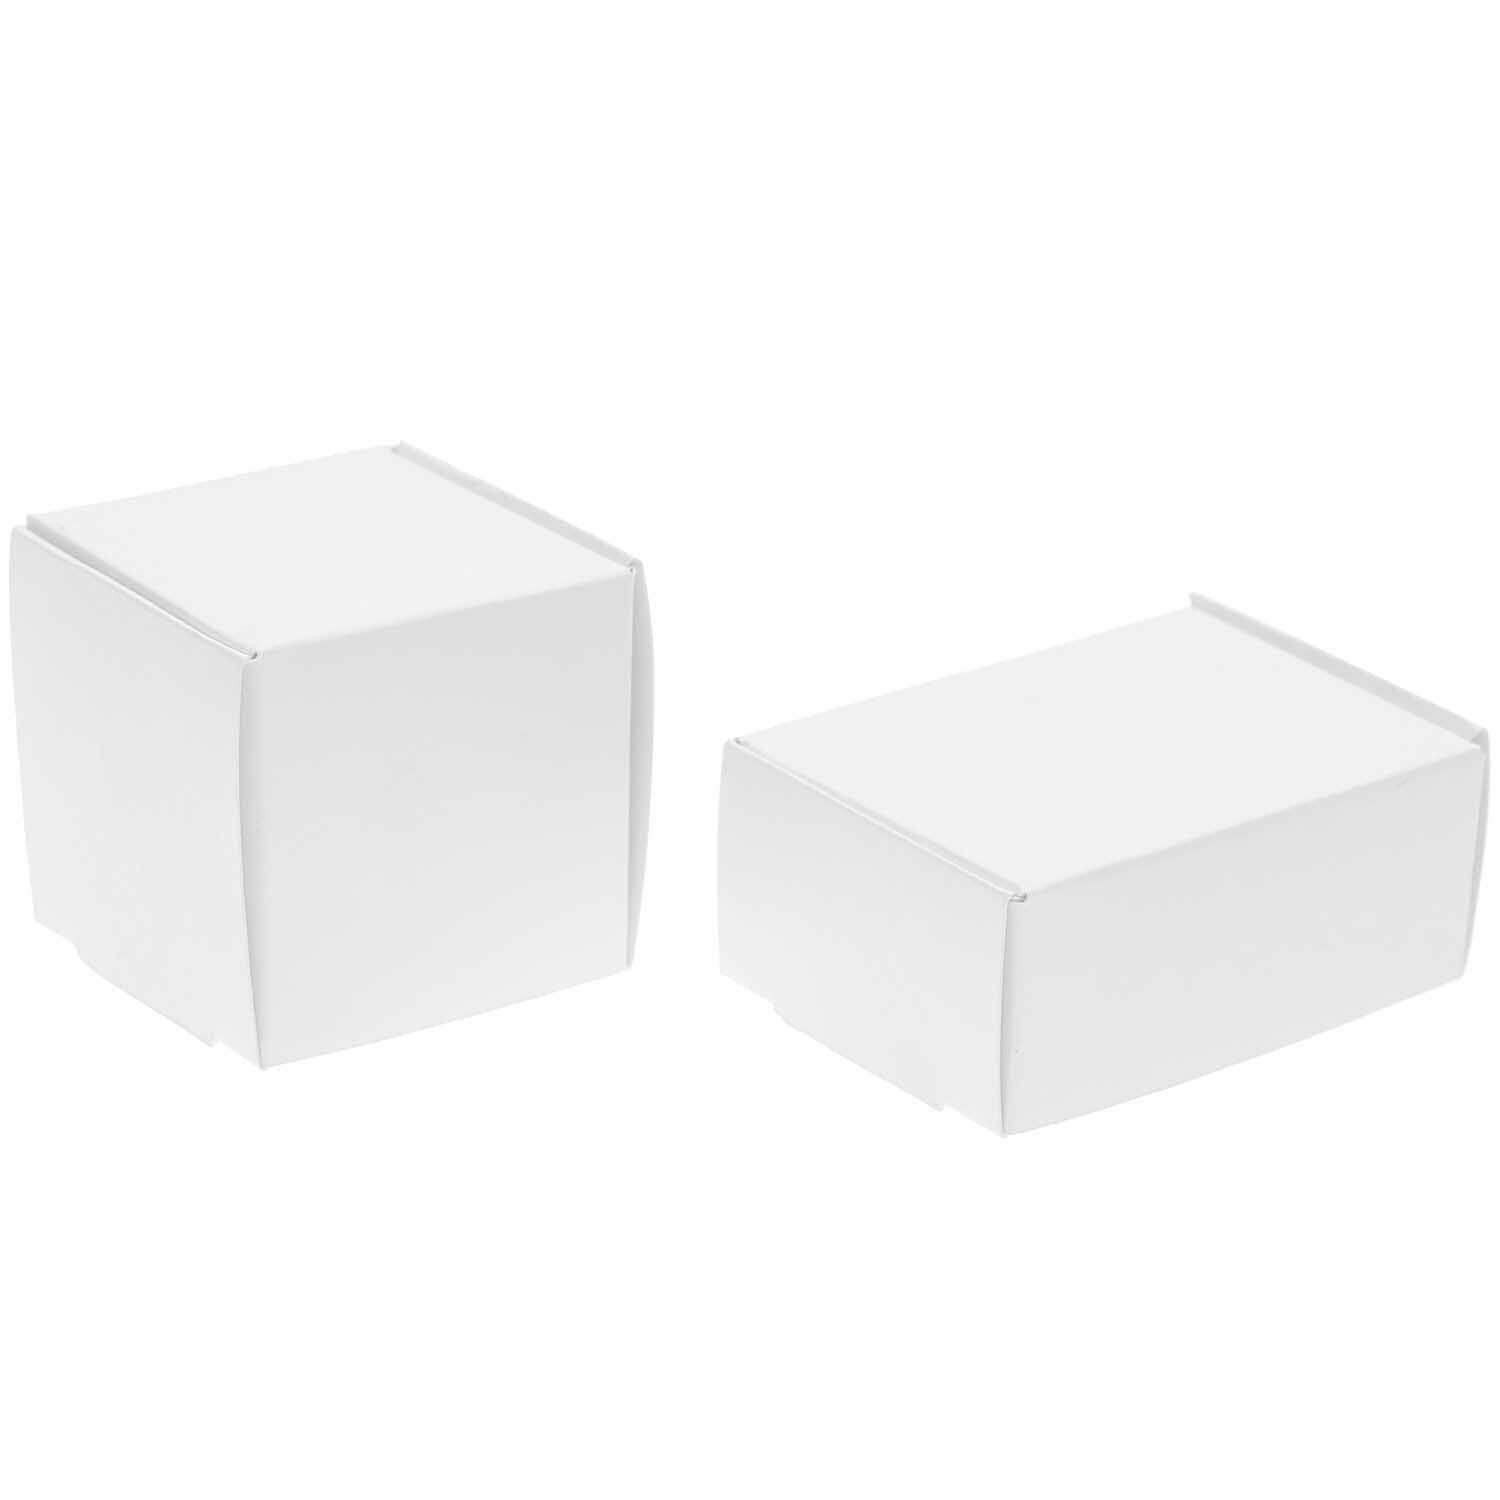 Rico Design Wichtel Miniatur Geschenkschachteln 6 Stück weiß